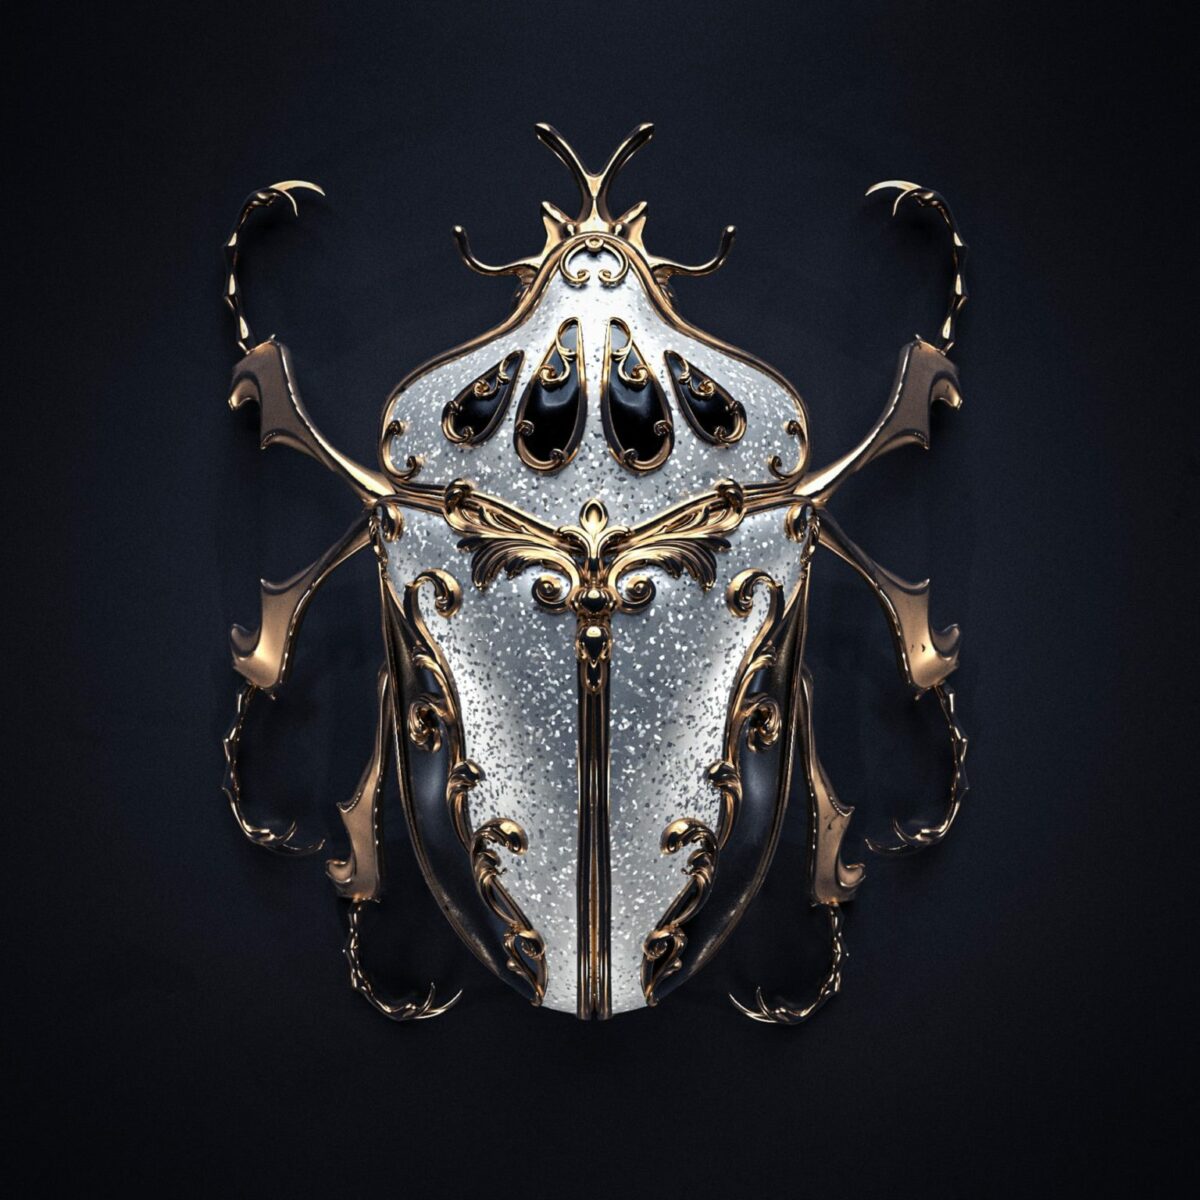 Jewel Insects Awesome Hyper Realistic Digital Jewelry By Sasha Vinogradova (8)